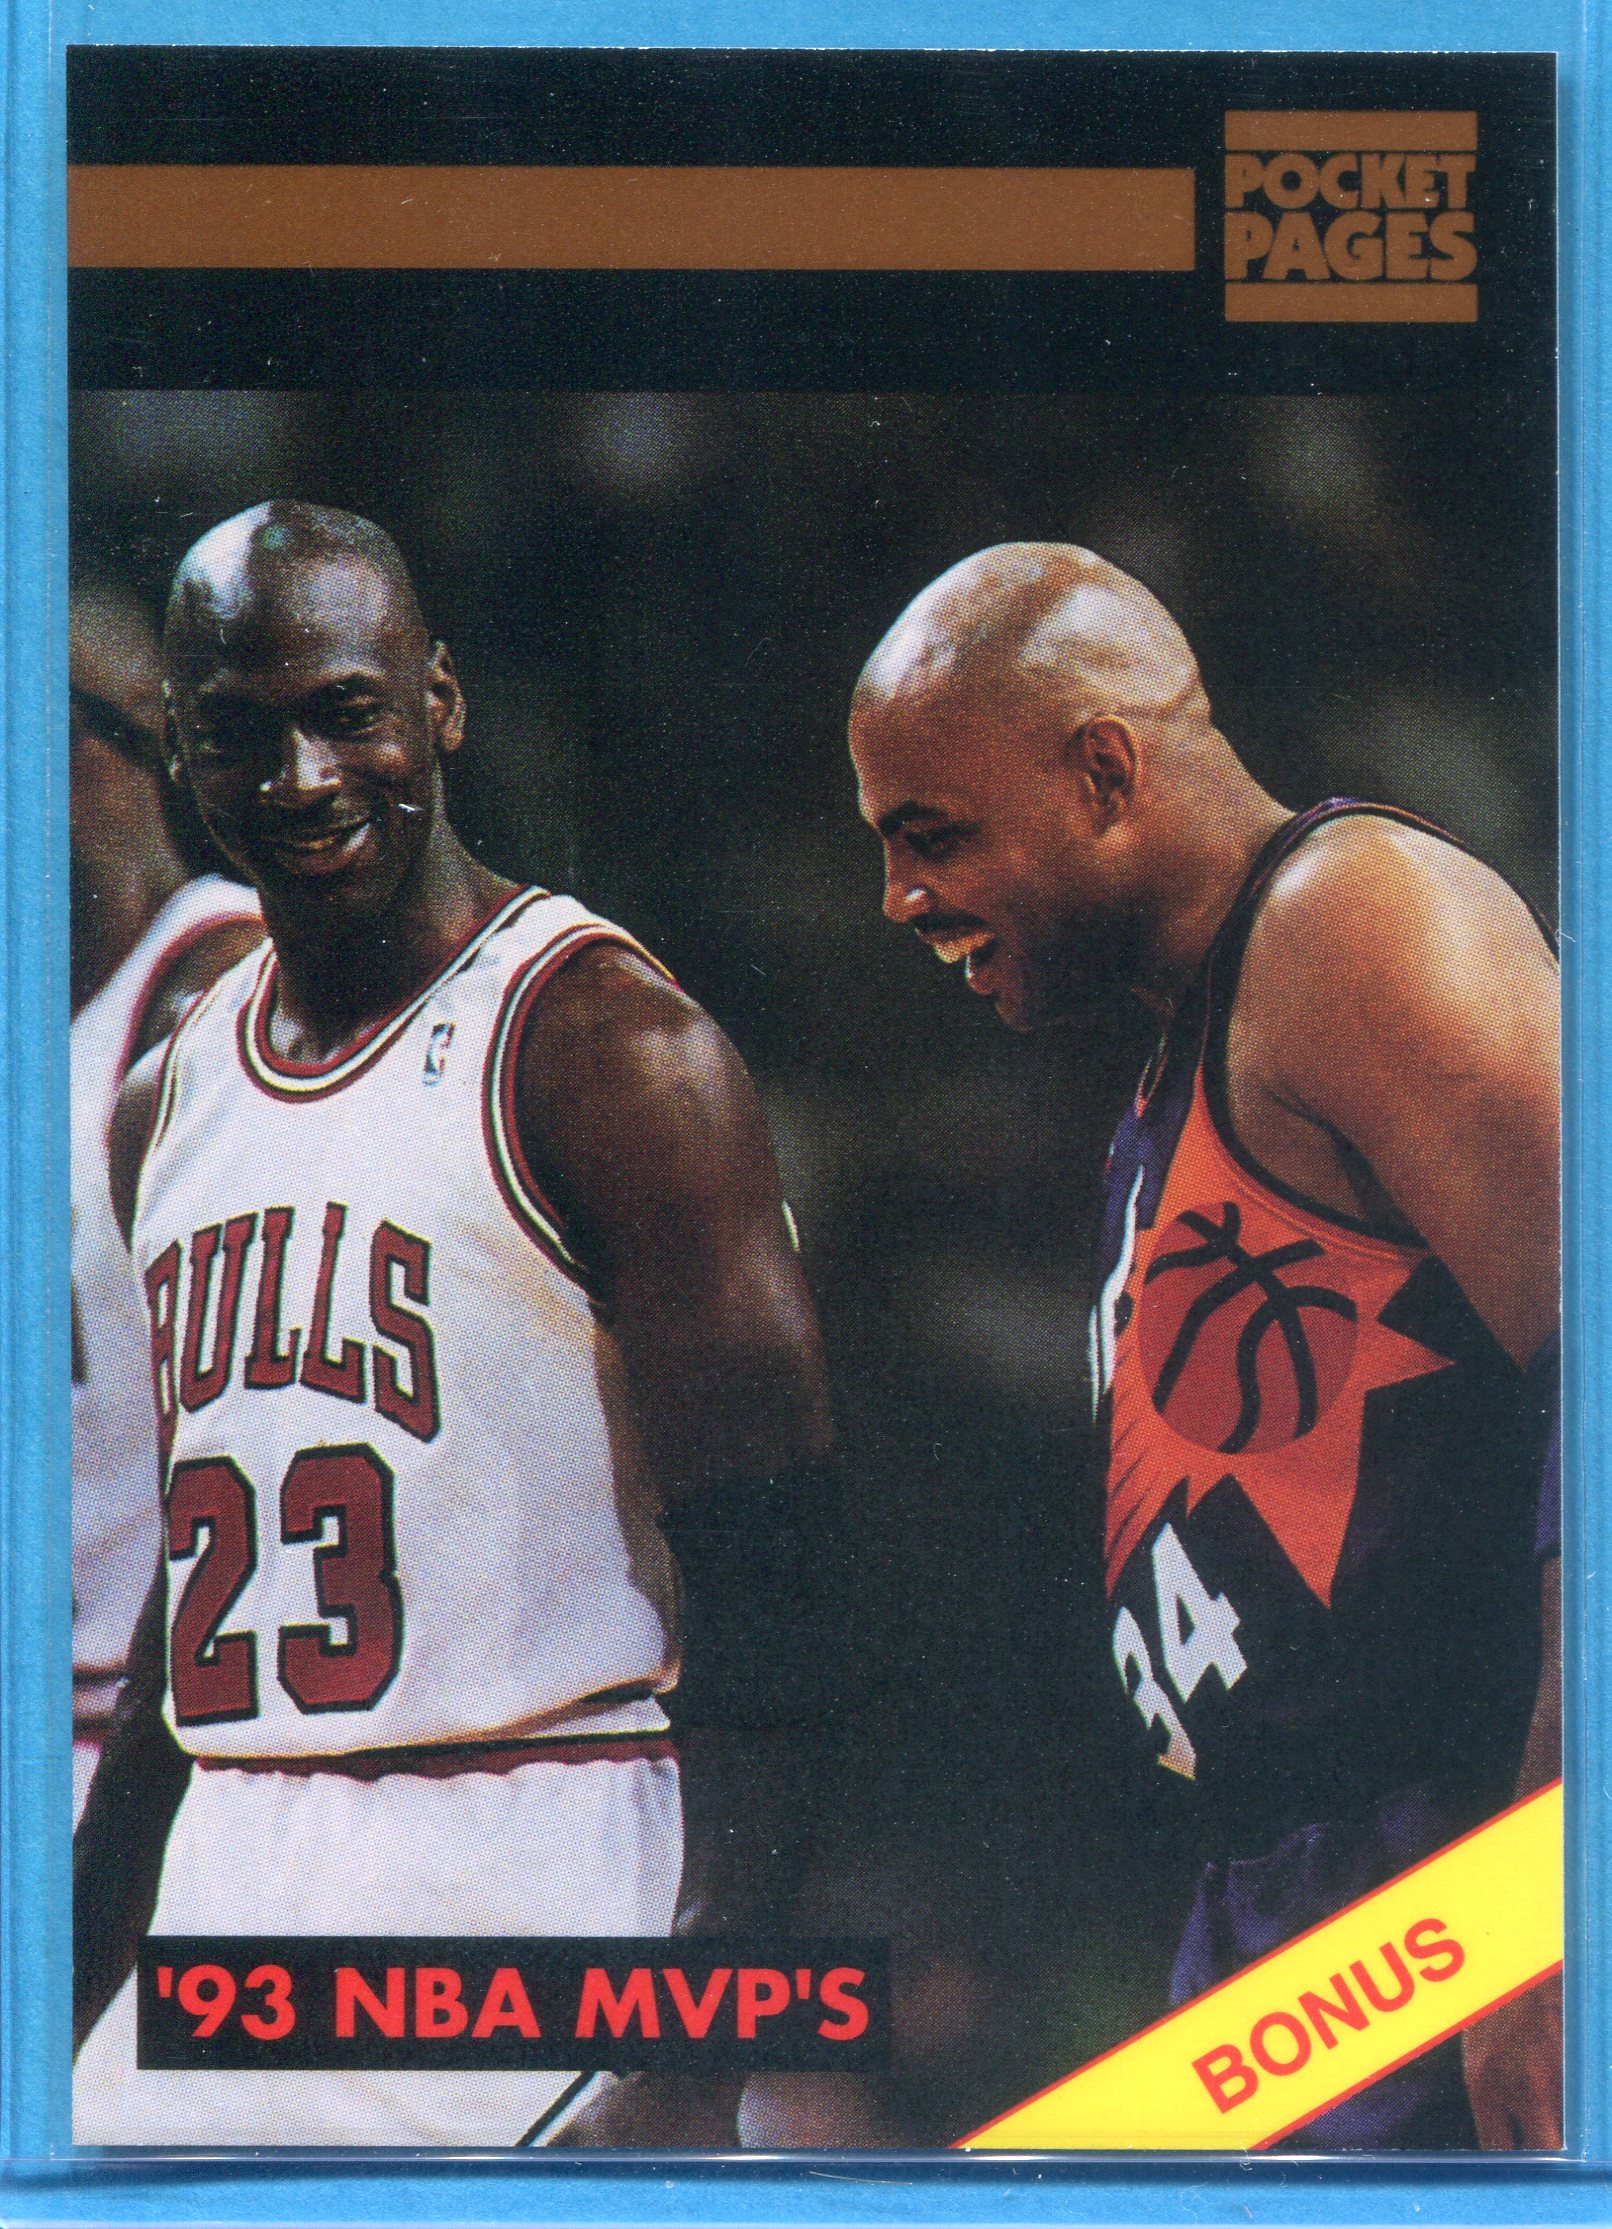 1993 Pocket Pages Bonus Card #BC3 Charles Barkley & Michael Jordan